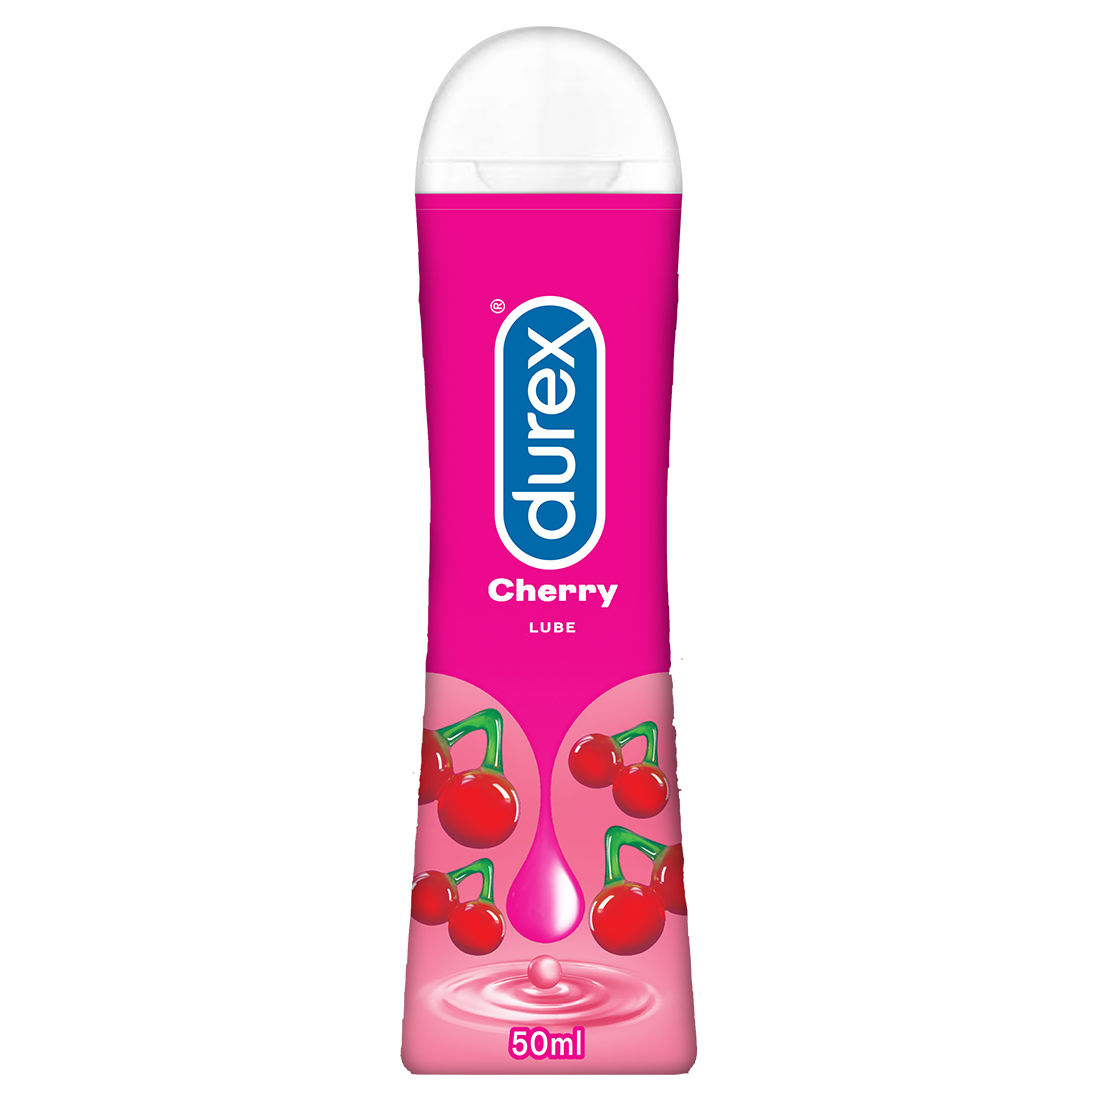 Durex Lube Cheeky Cherry Lubricant Gela For Women and Men